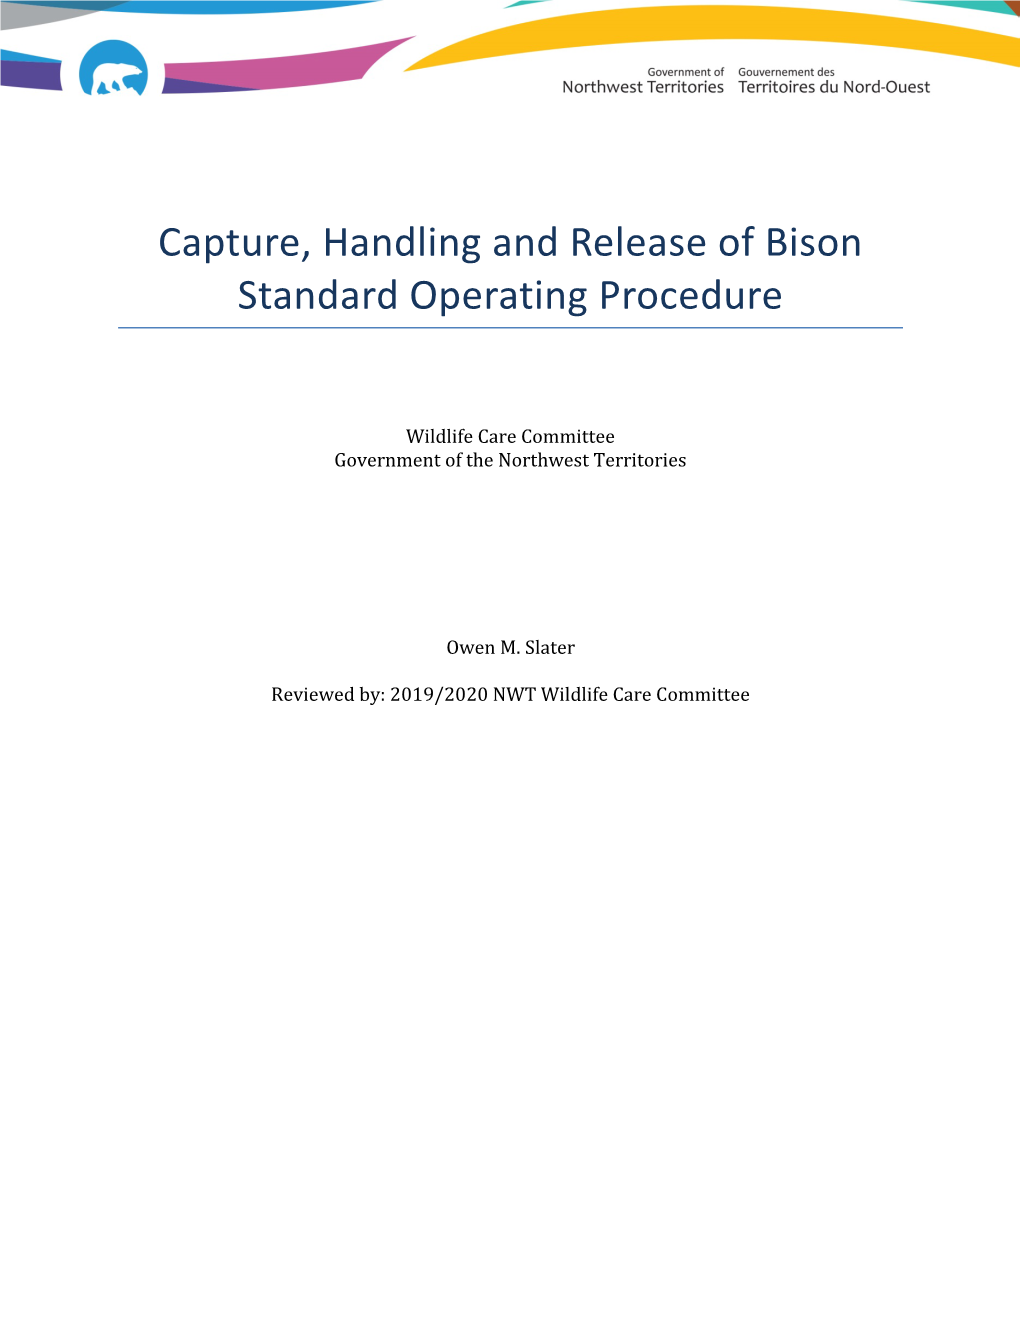 Capture, Handling and Release of Bison Standard Operating Procedure